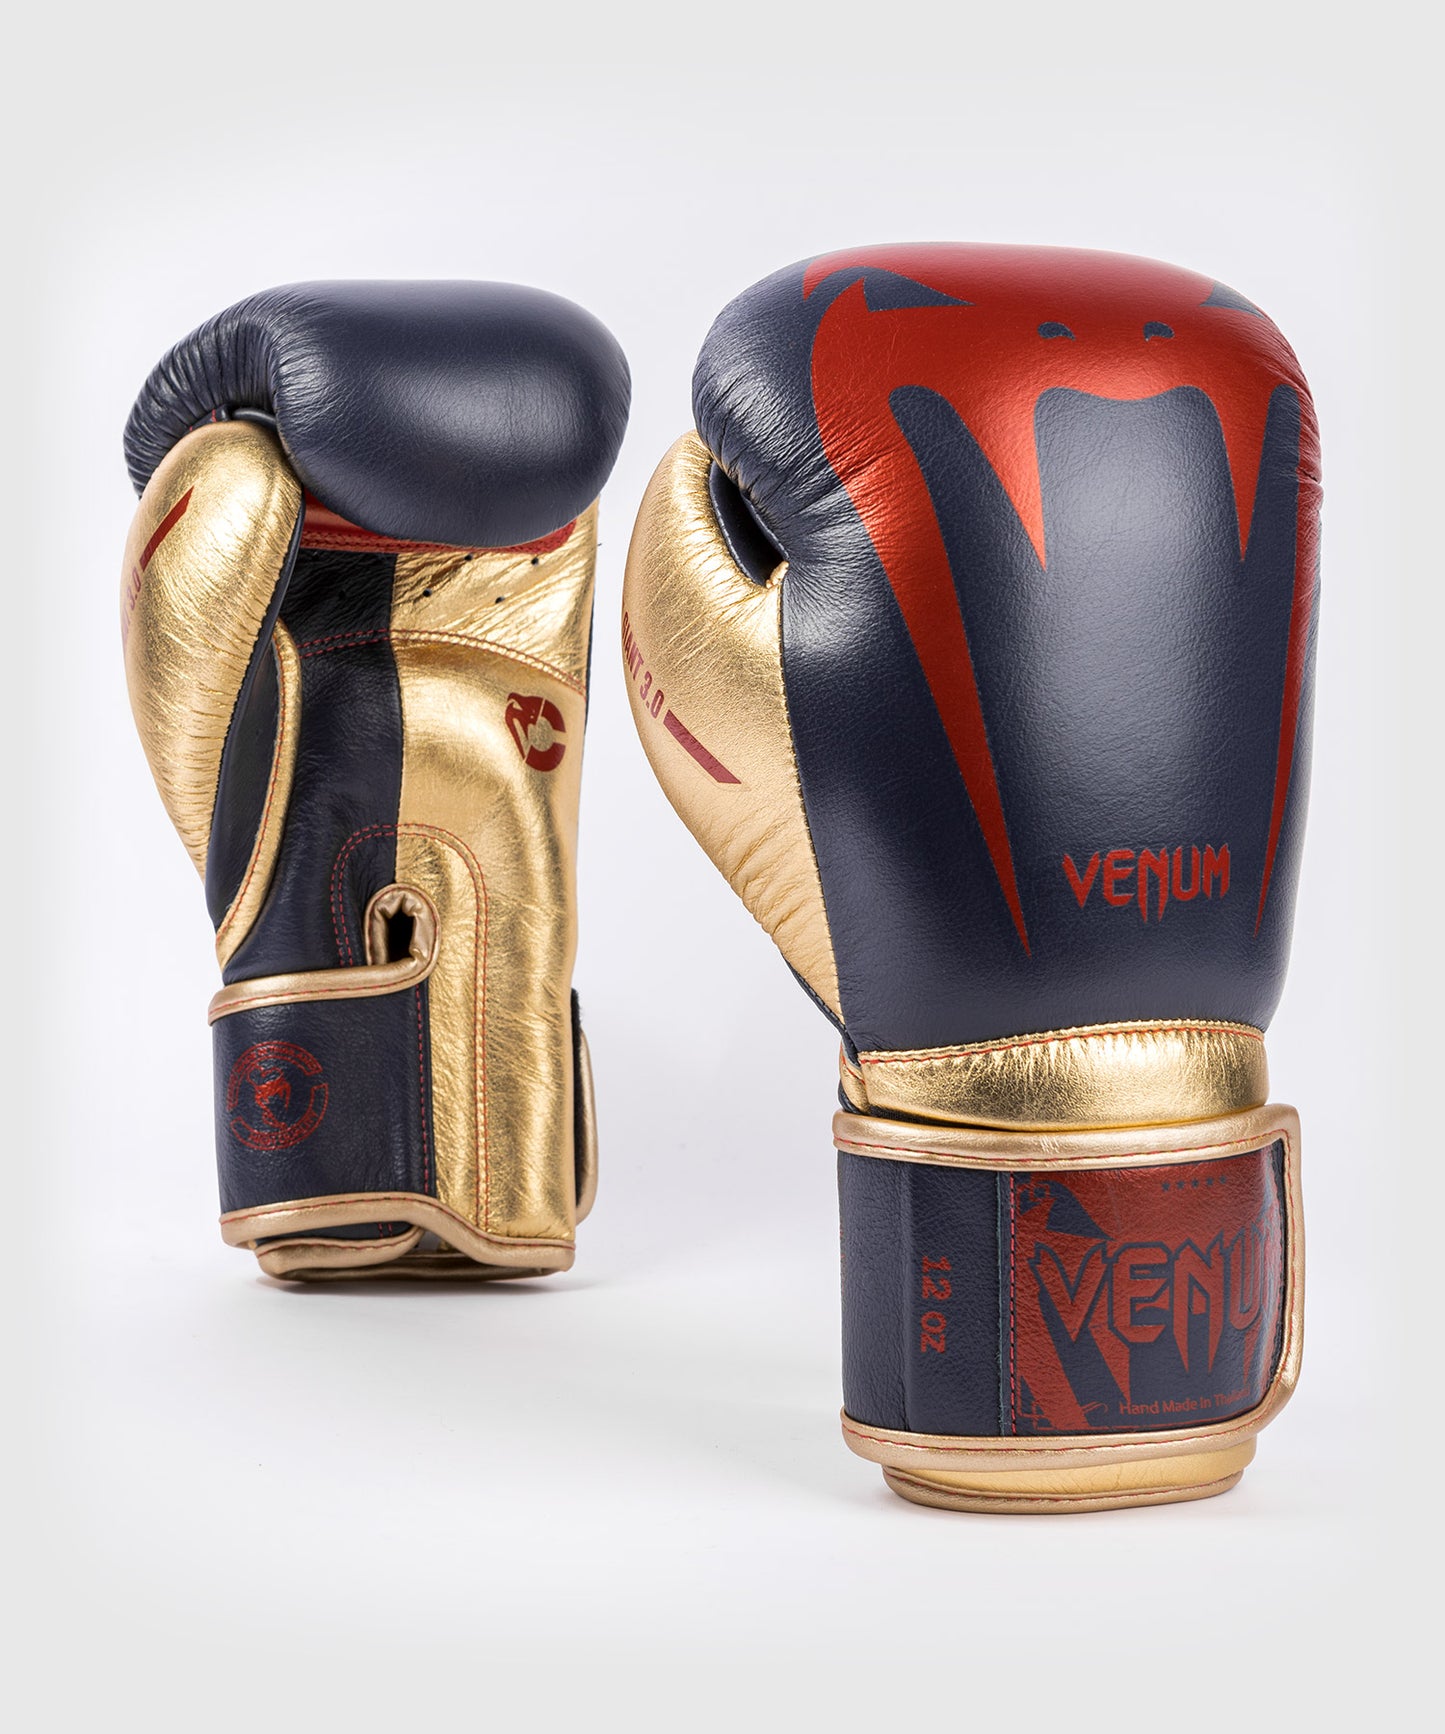 Venum giant 3.0 boxing gloves